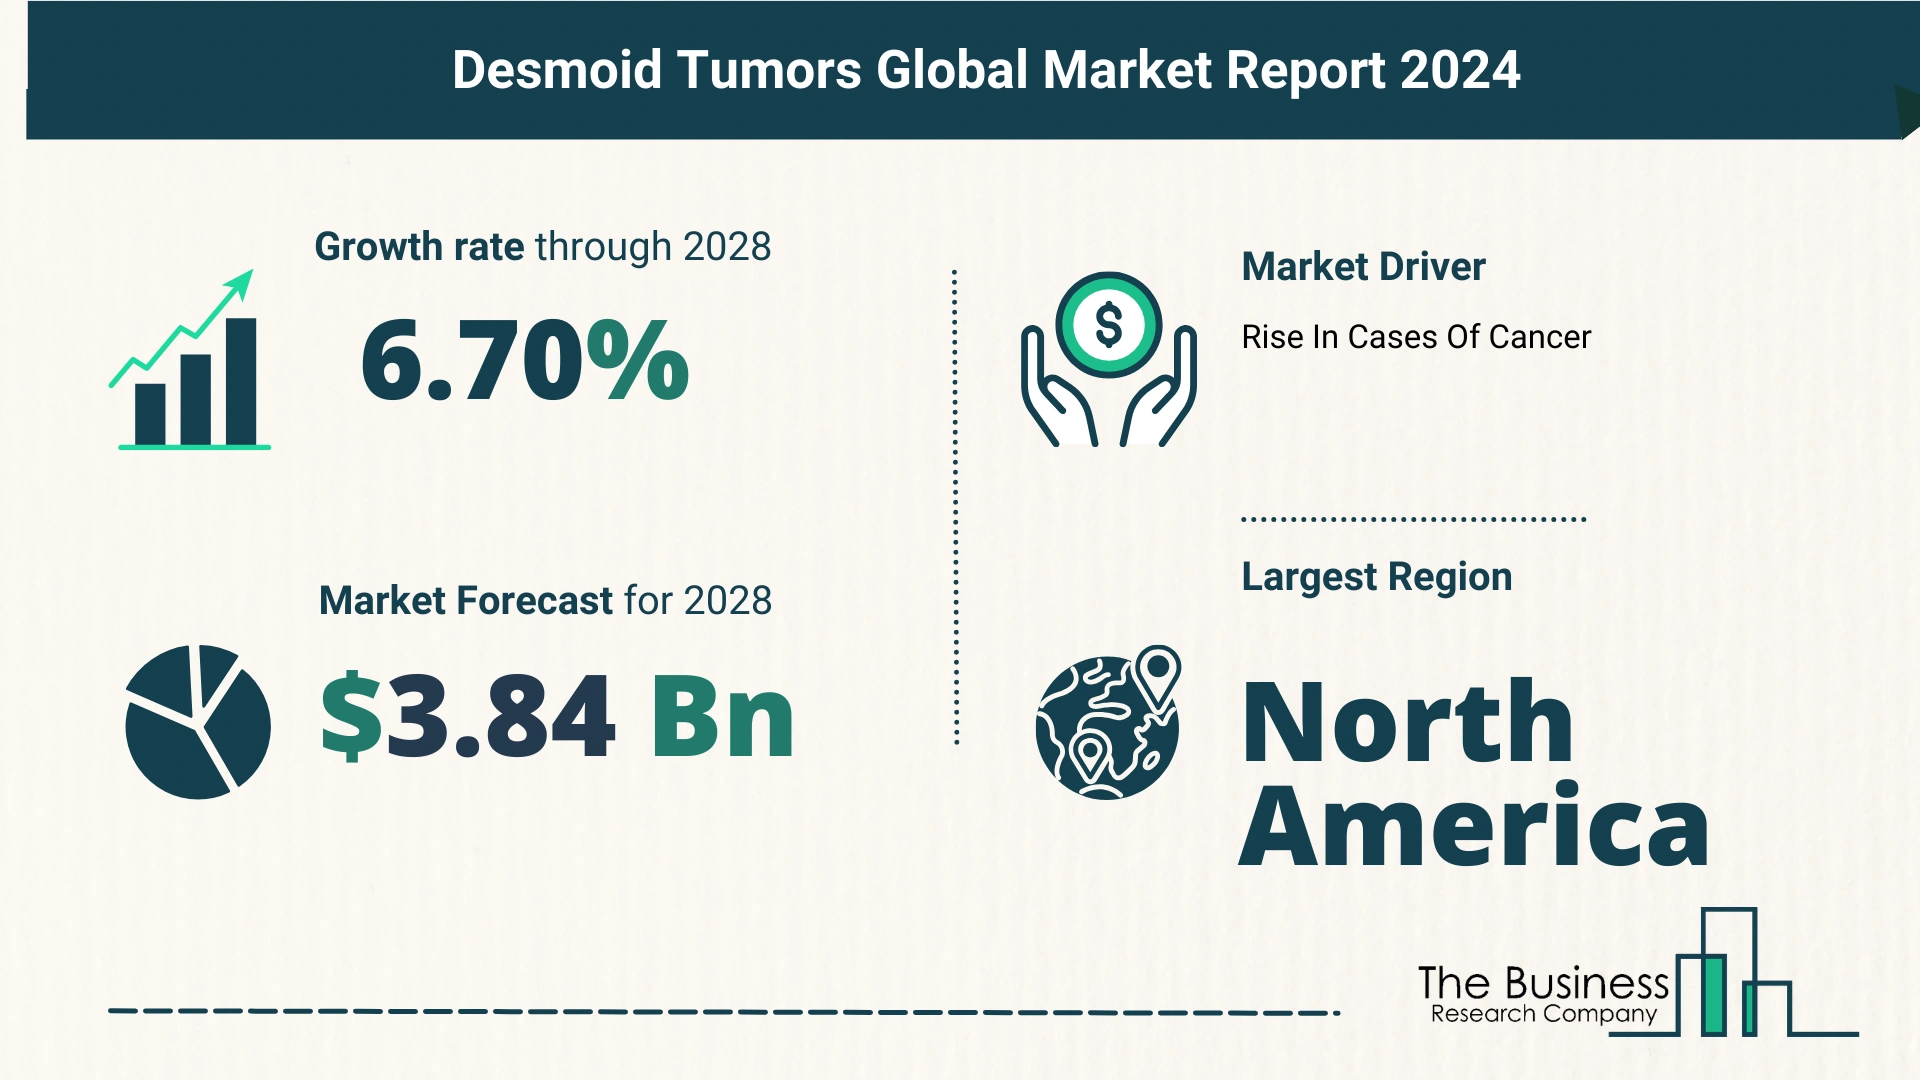 Desmoid Tumors Market Forecast 2024: Forecast Market Size, Drivers And Key Segments